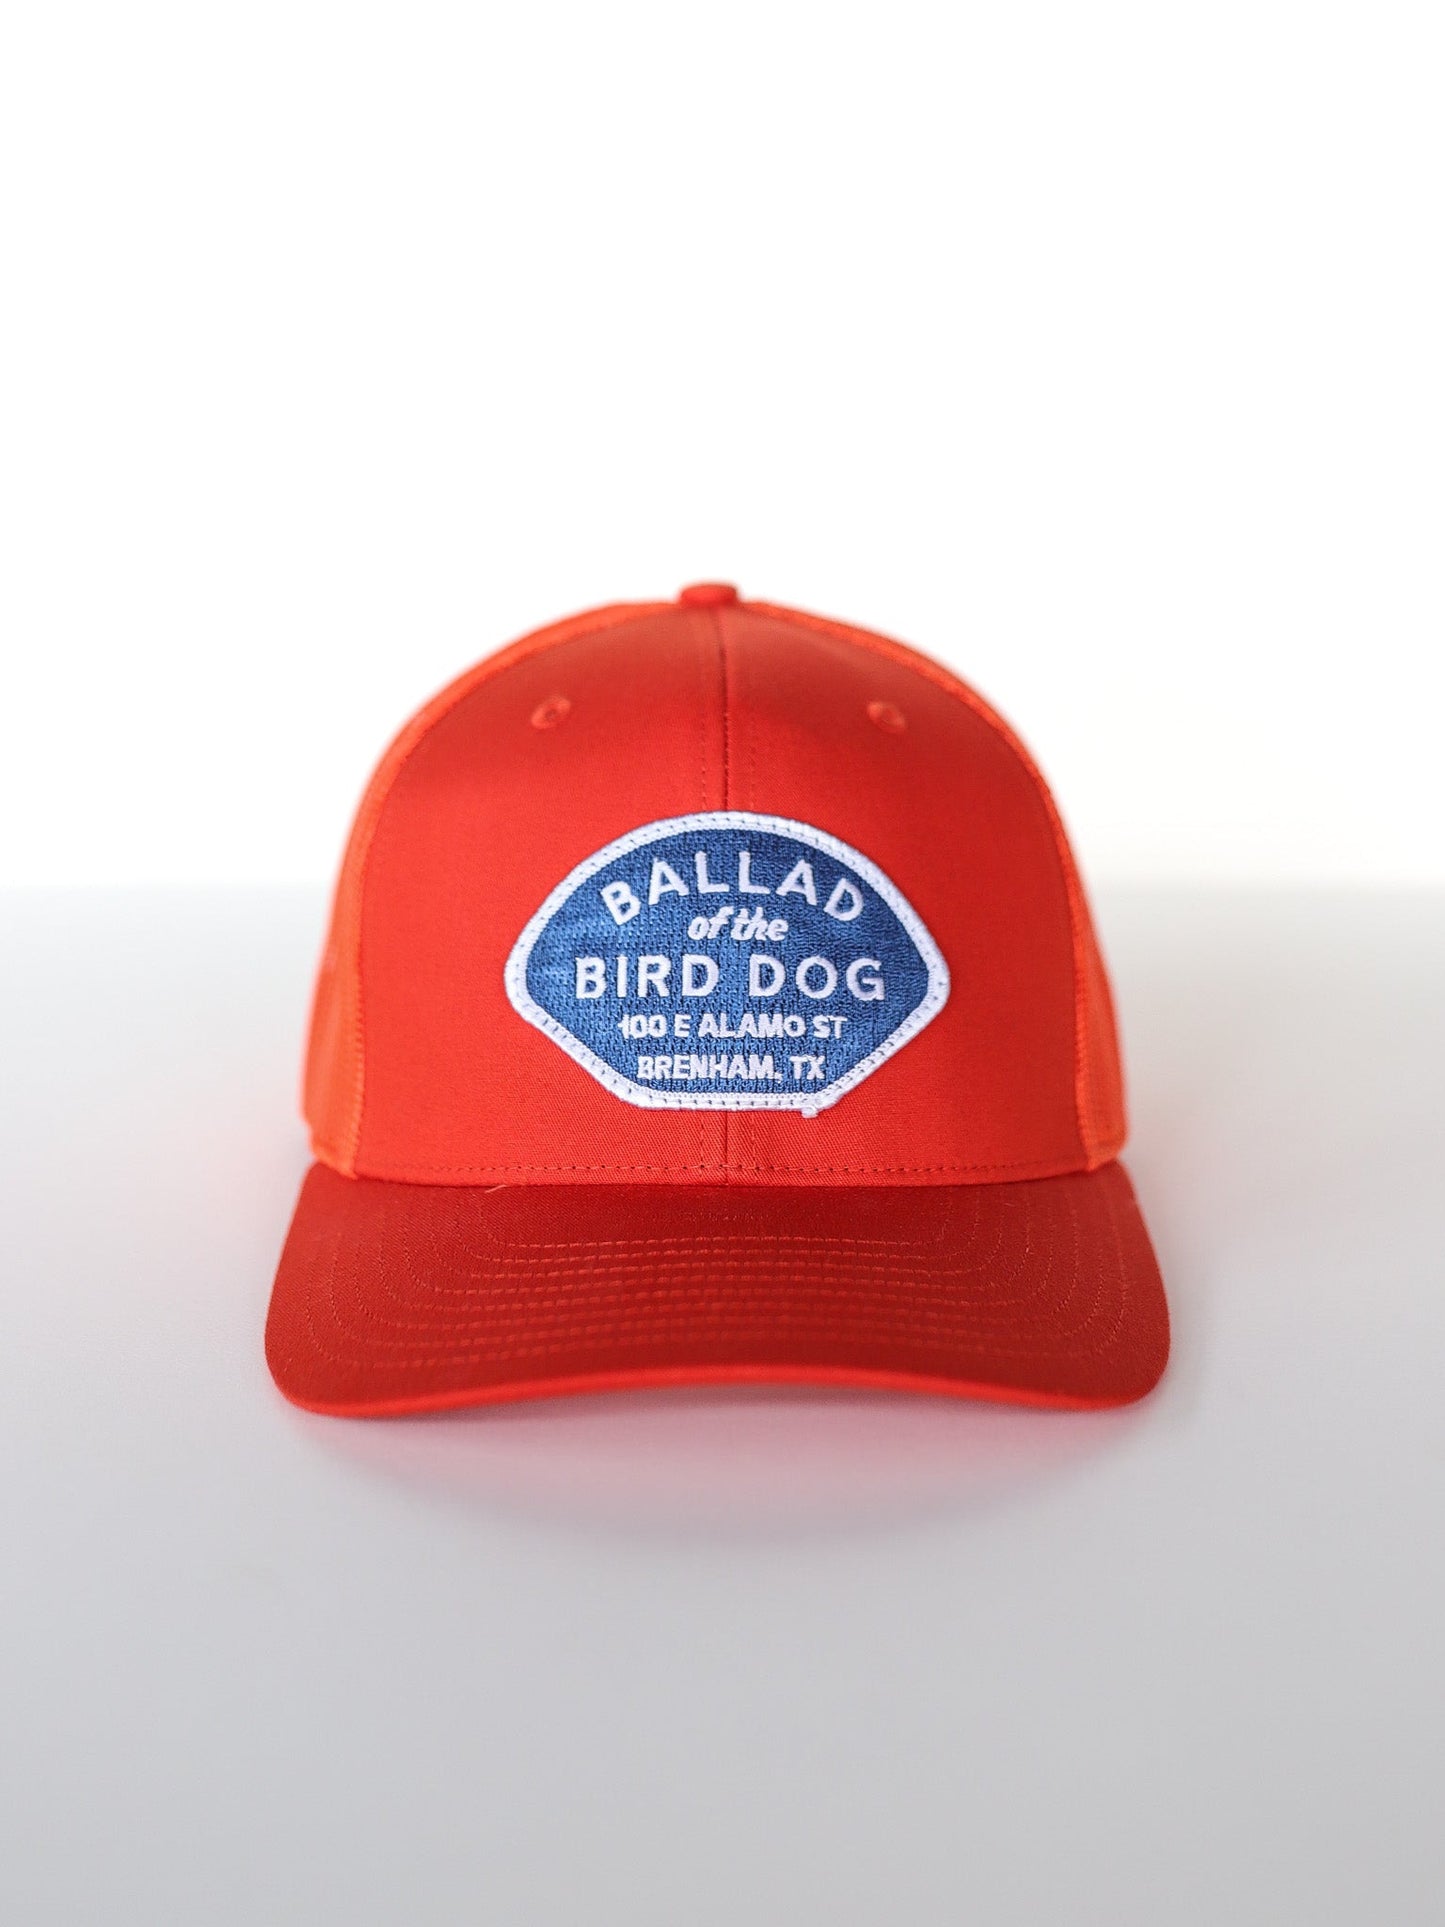 Shop Hat | Upland Patch Ballad Of The Bird Dog - Baseball